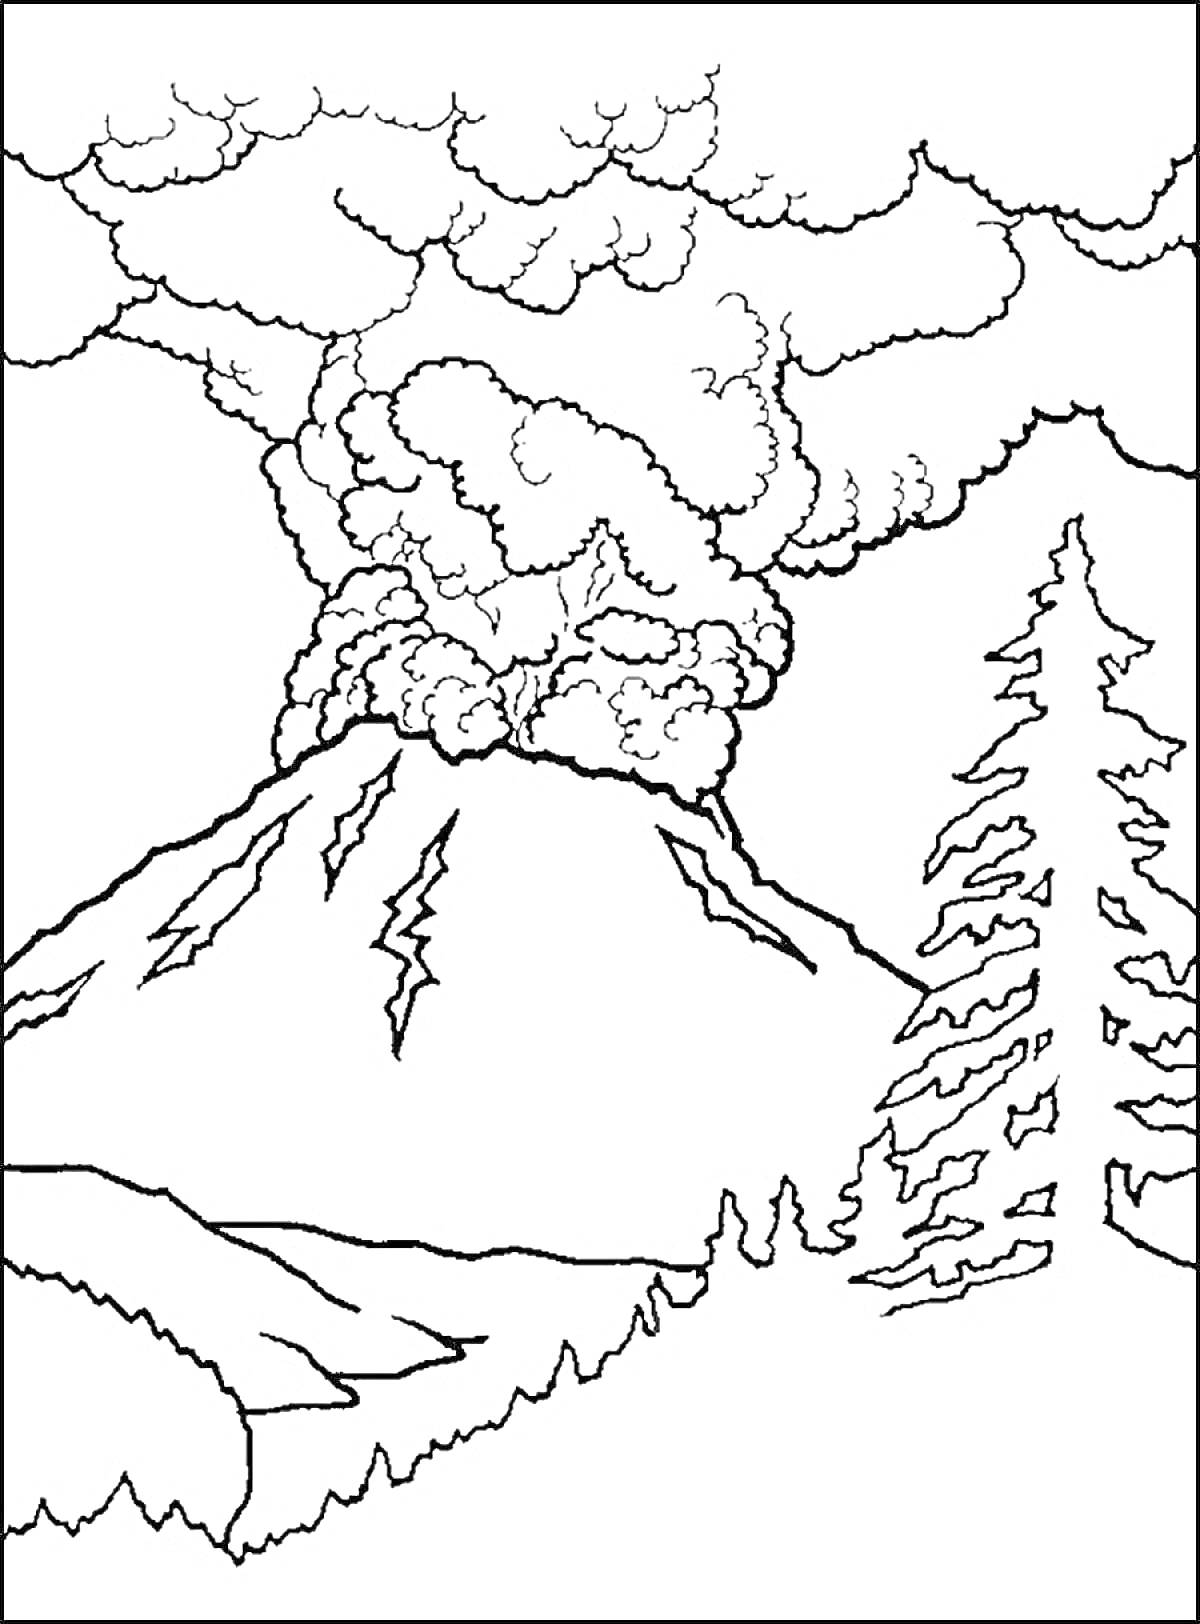 Раскраска Извержение вулкана среди леса с облаками дыма на небе и елями на переднем плане